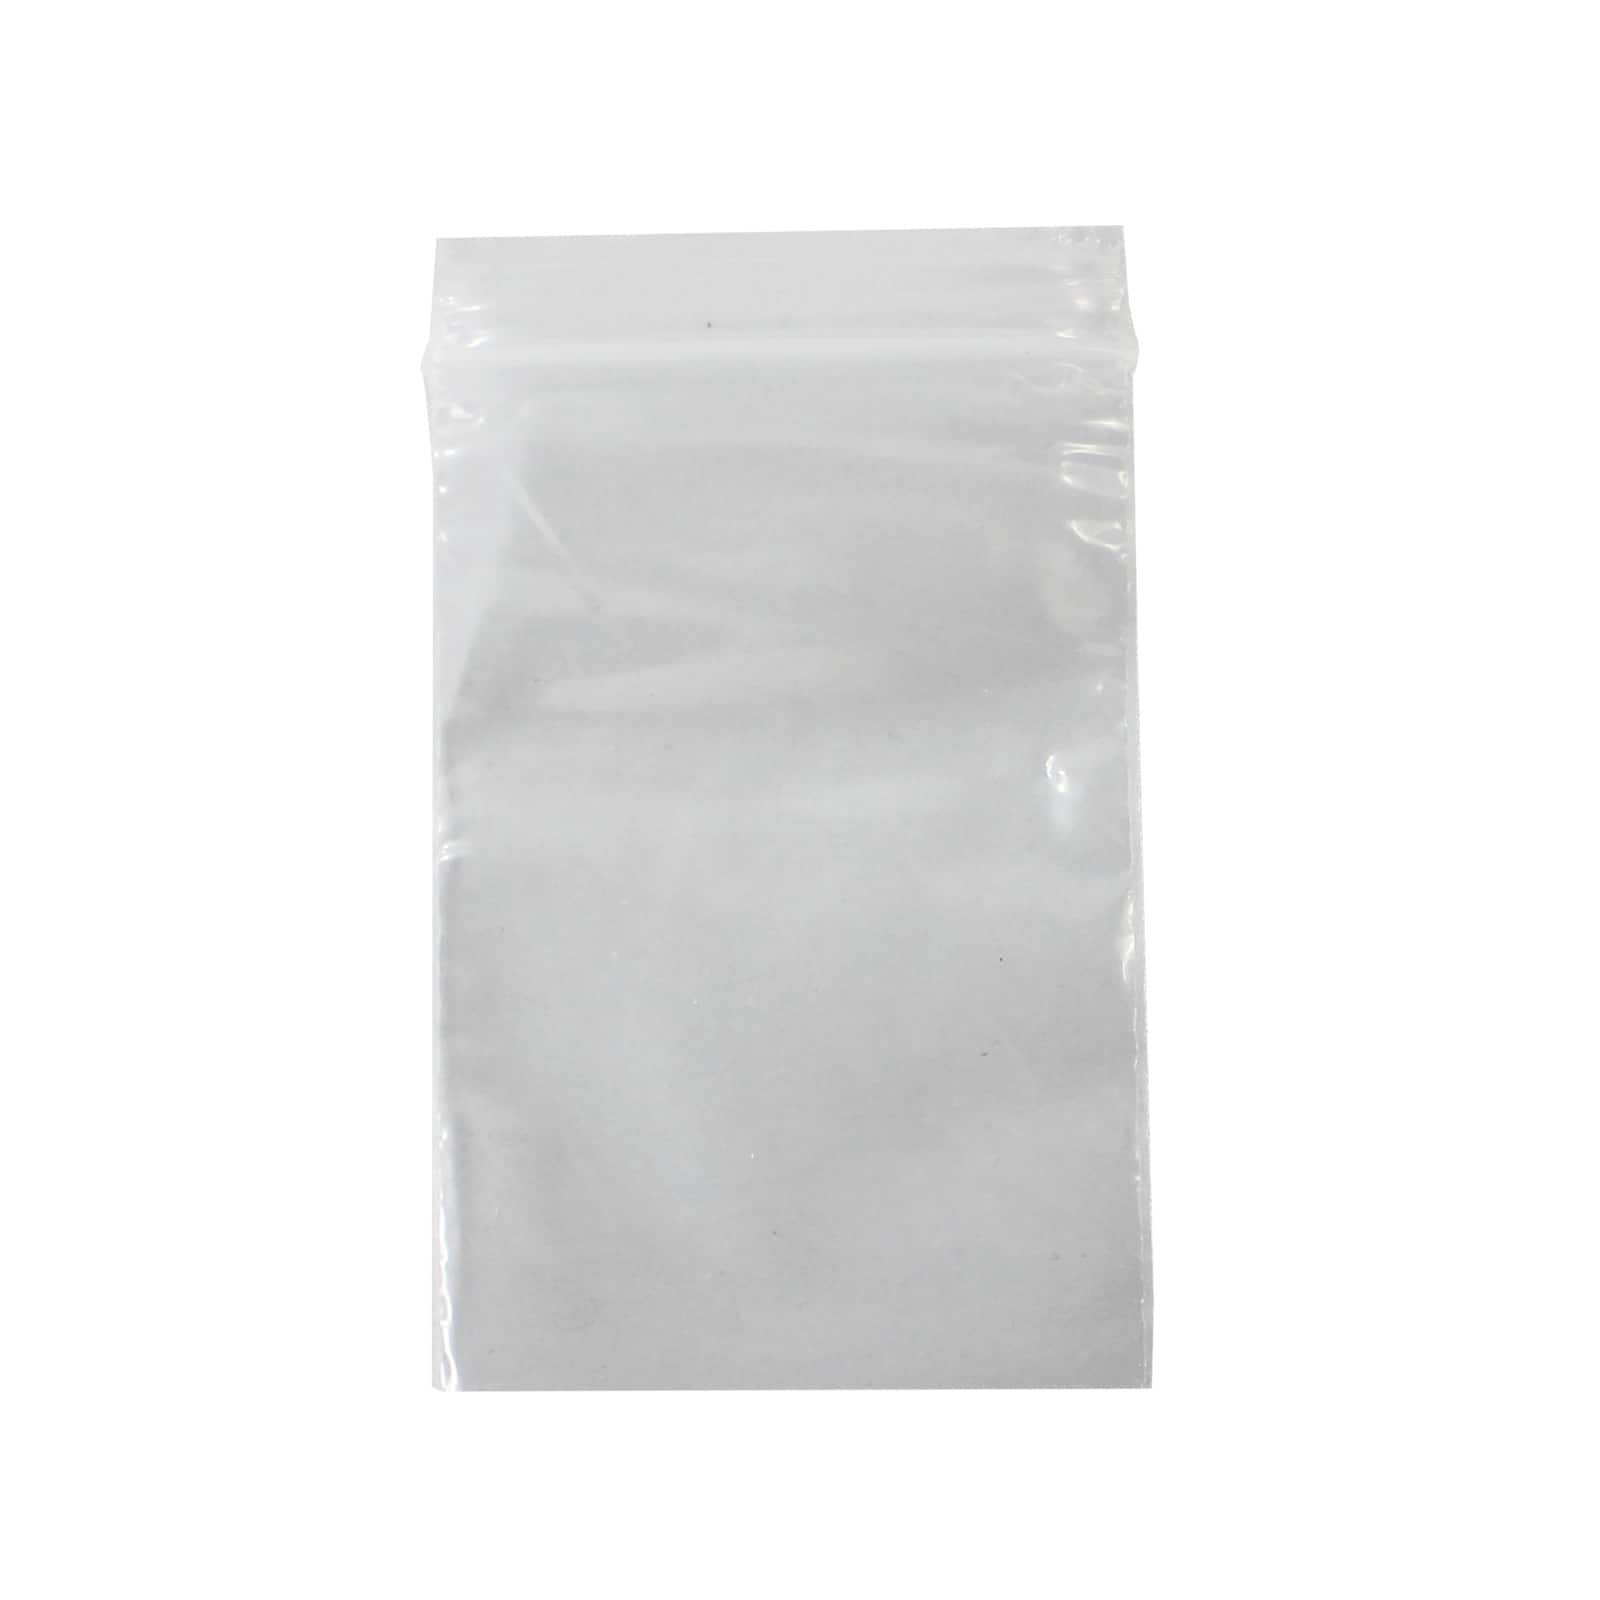 2000 Bags 2x3 Clear Reclosable Baggies 2Mil 2"x3" ZIP LOCK Plastic Poly Bags 